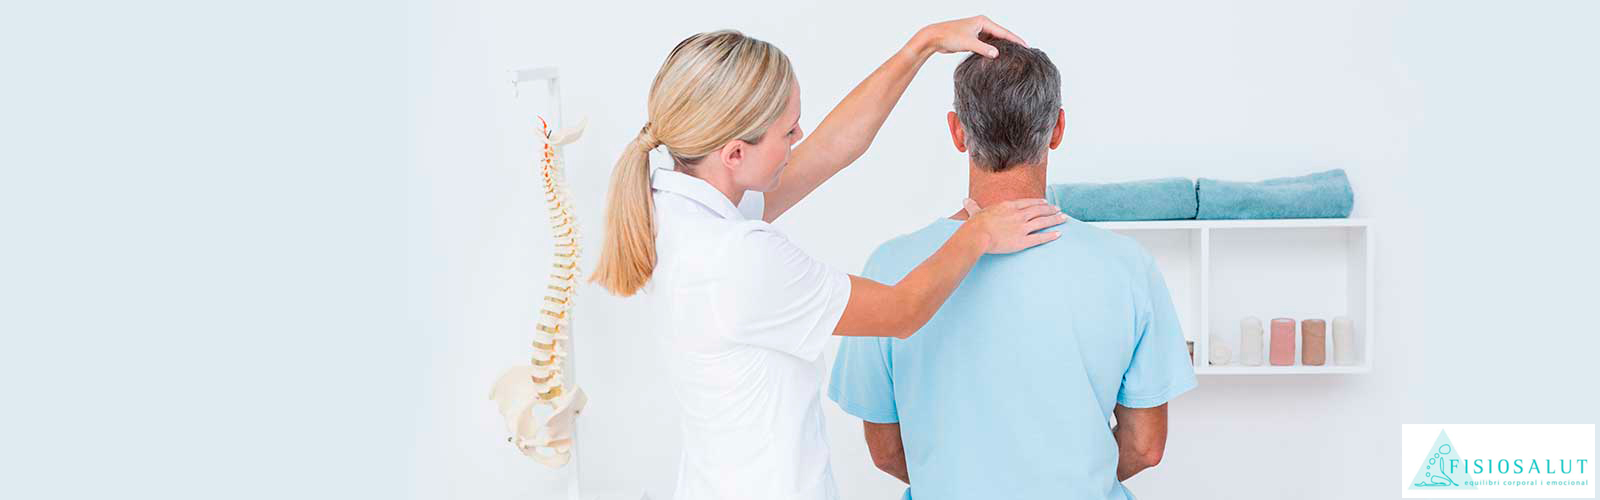 Images Fisiosalut Alzira - Fisioterapia - Osteopatía - Podología - Psicología